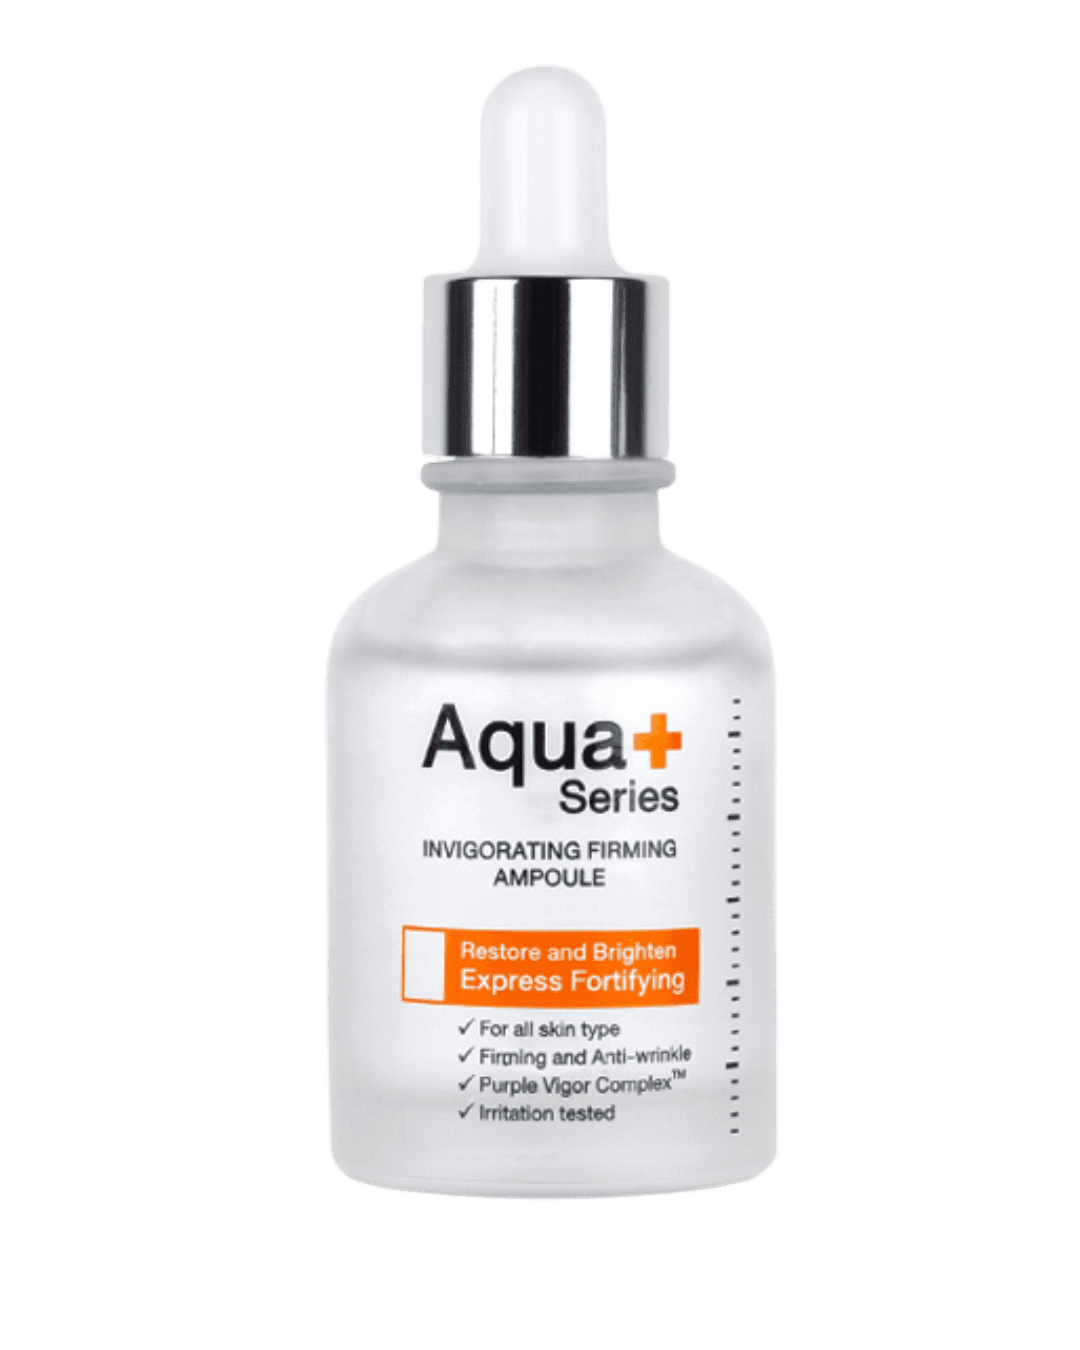 Aqua+ Series Invigorating Firming Ampoule